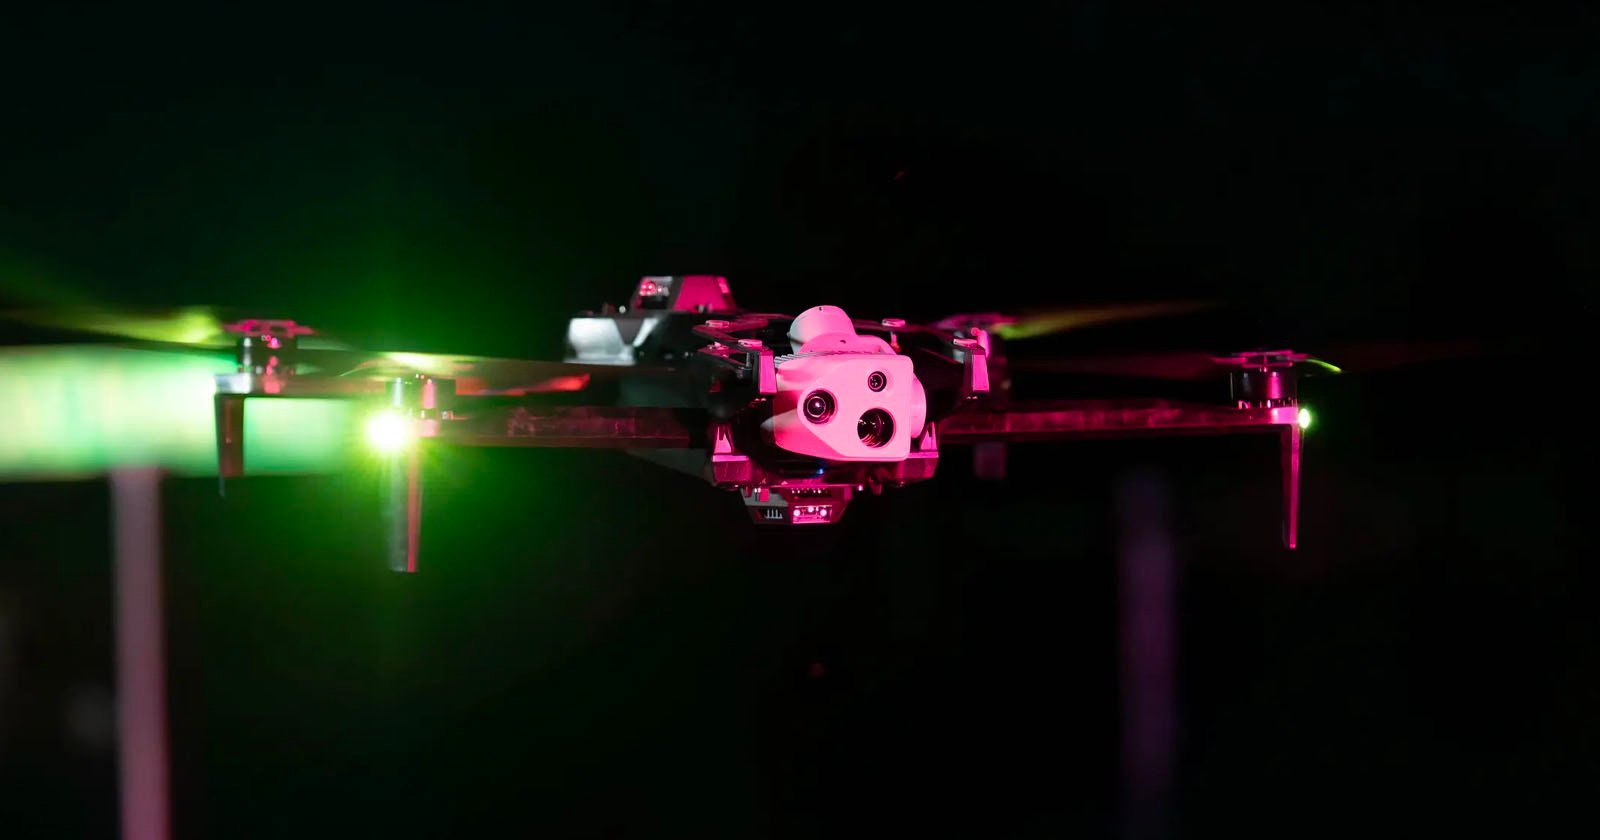  drone skydio 